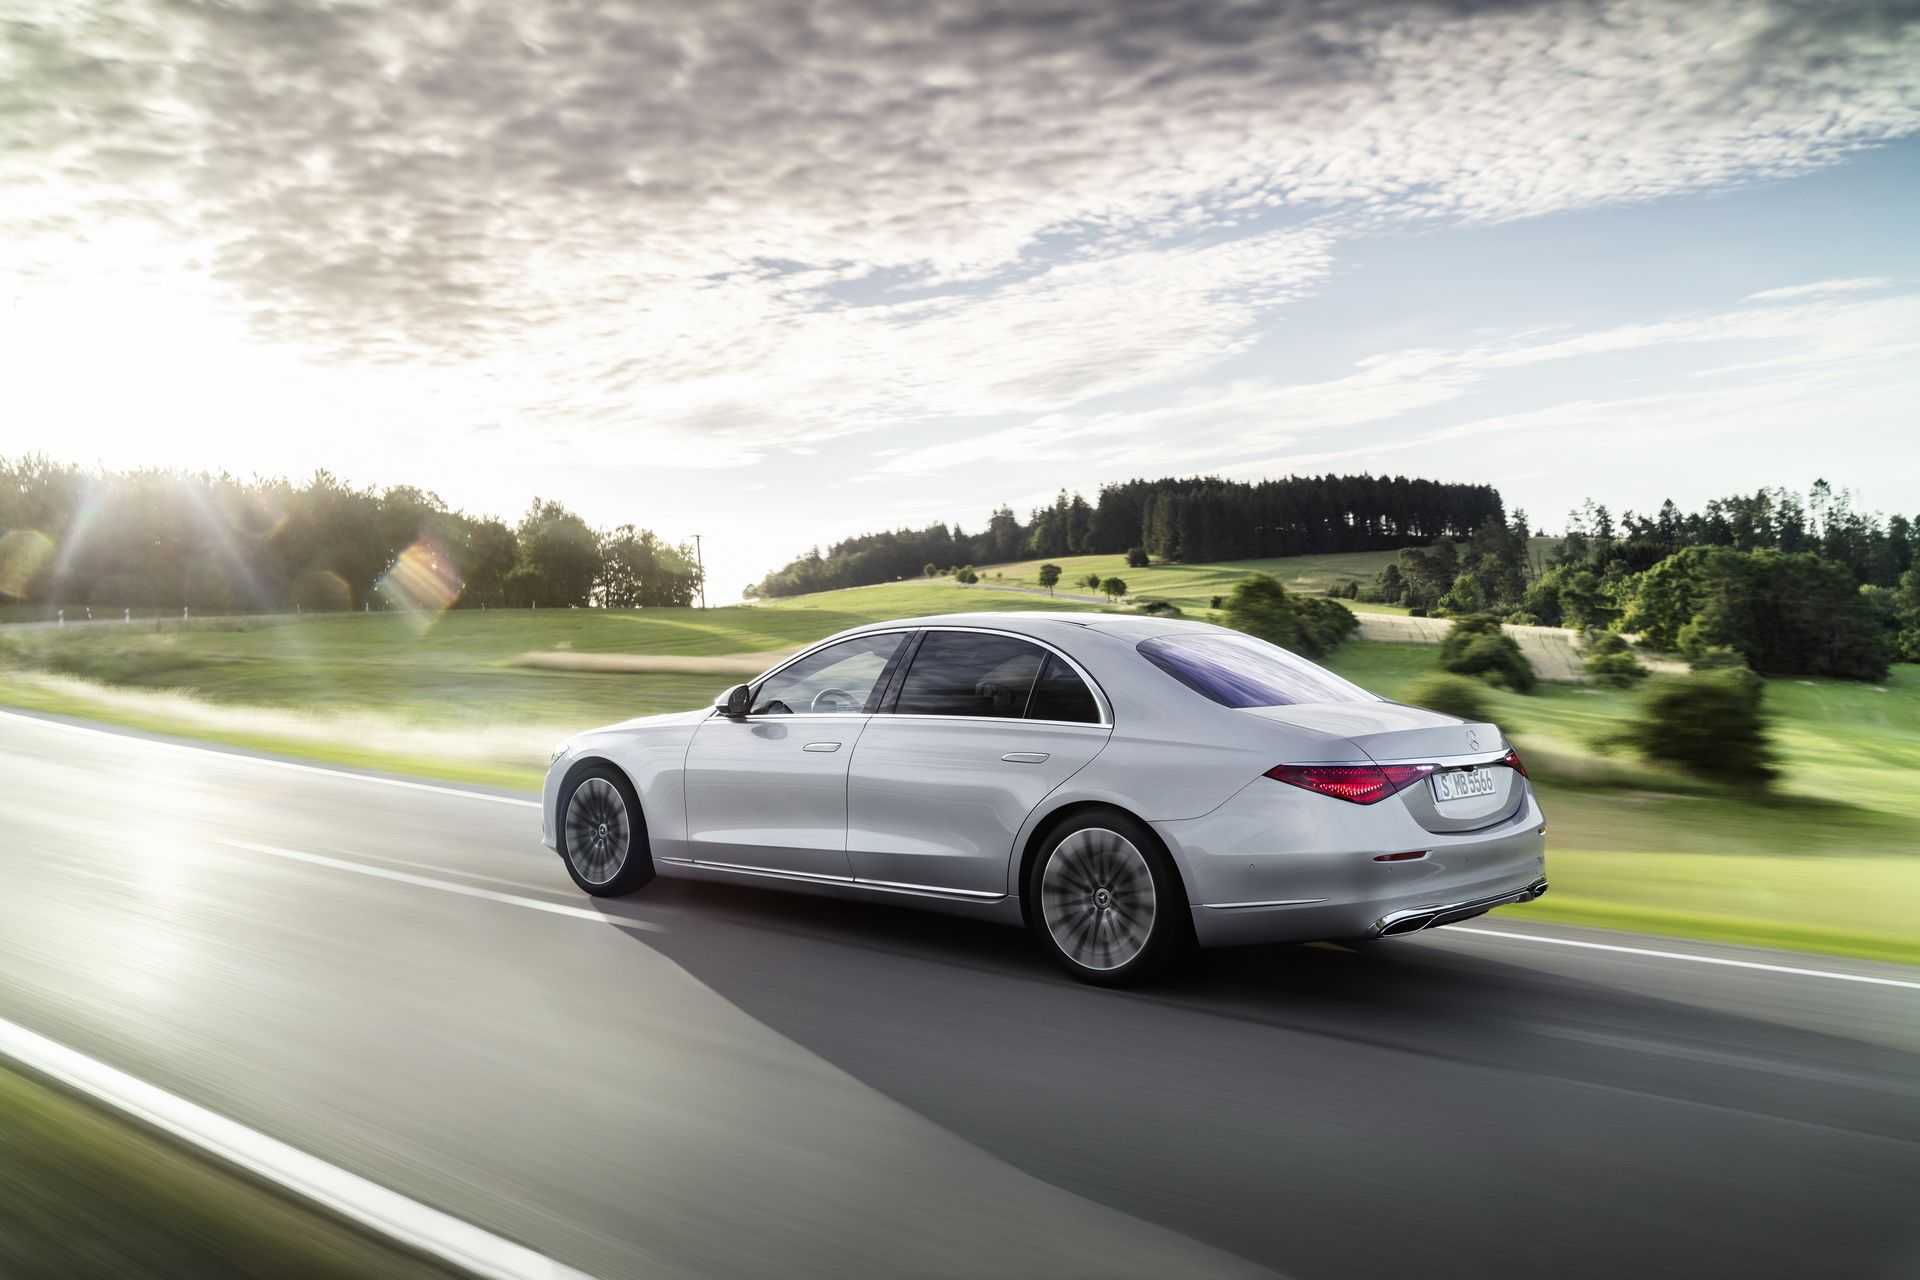 Mercedes s-class: история модели